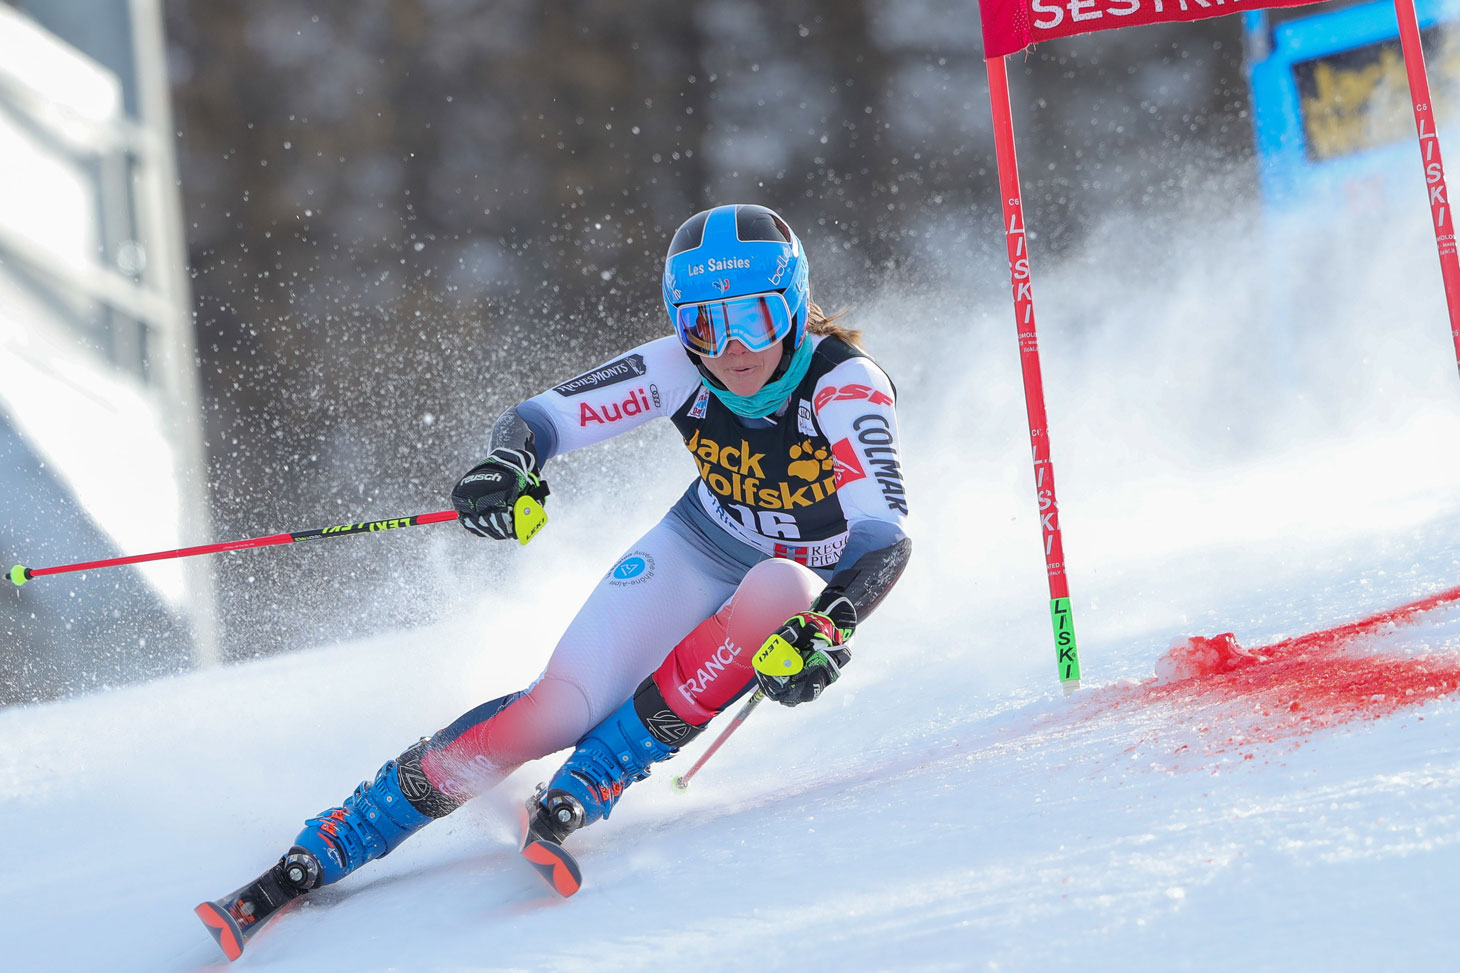 Clara Direz, Diplômée de l’UGA. Equipe de France de ski alpin © Shutterstock